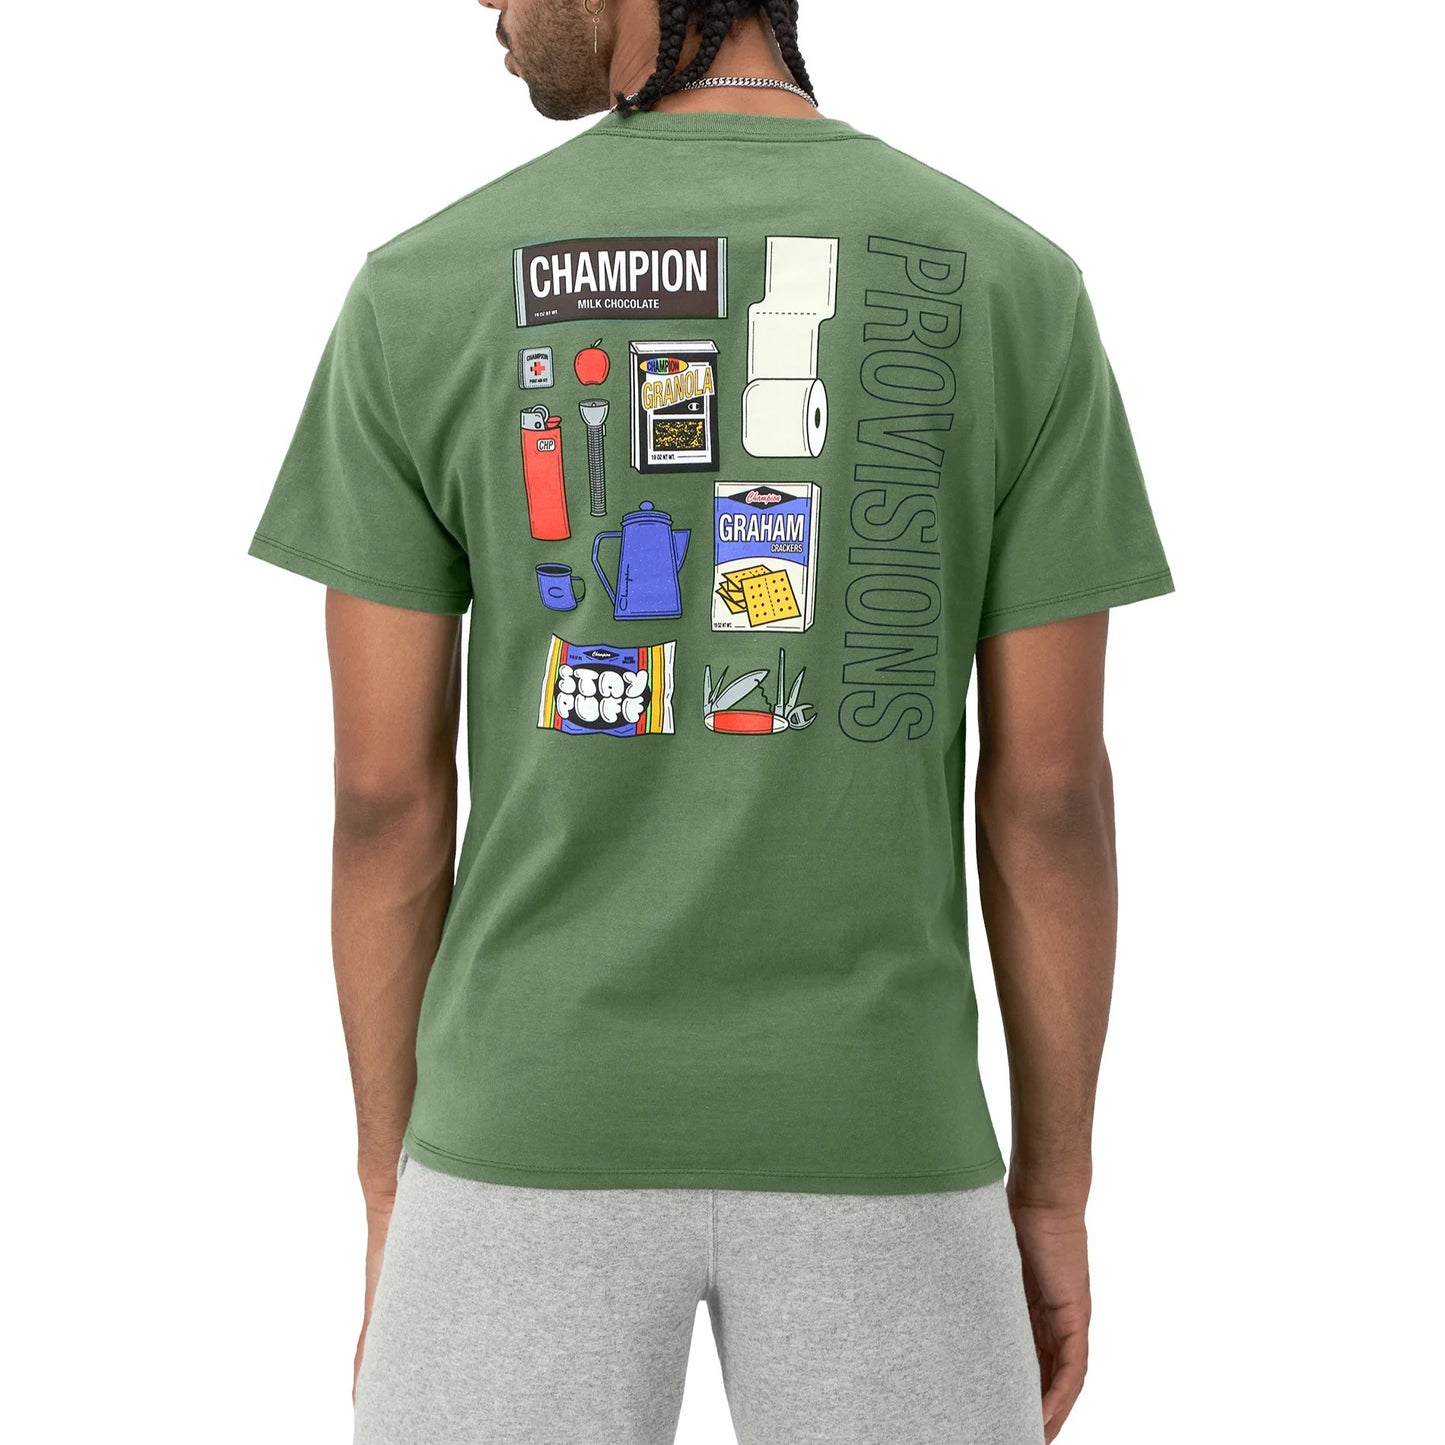 CHAMPION Provisions Classic Graphic T-Shirt - Sage